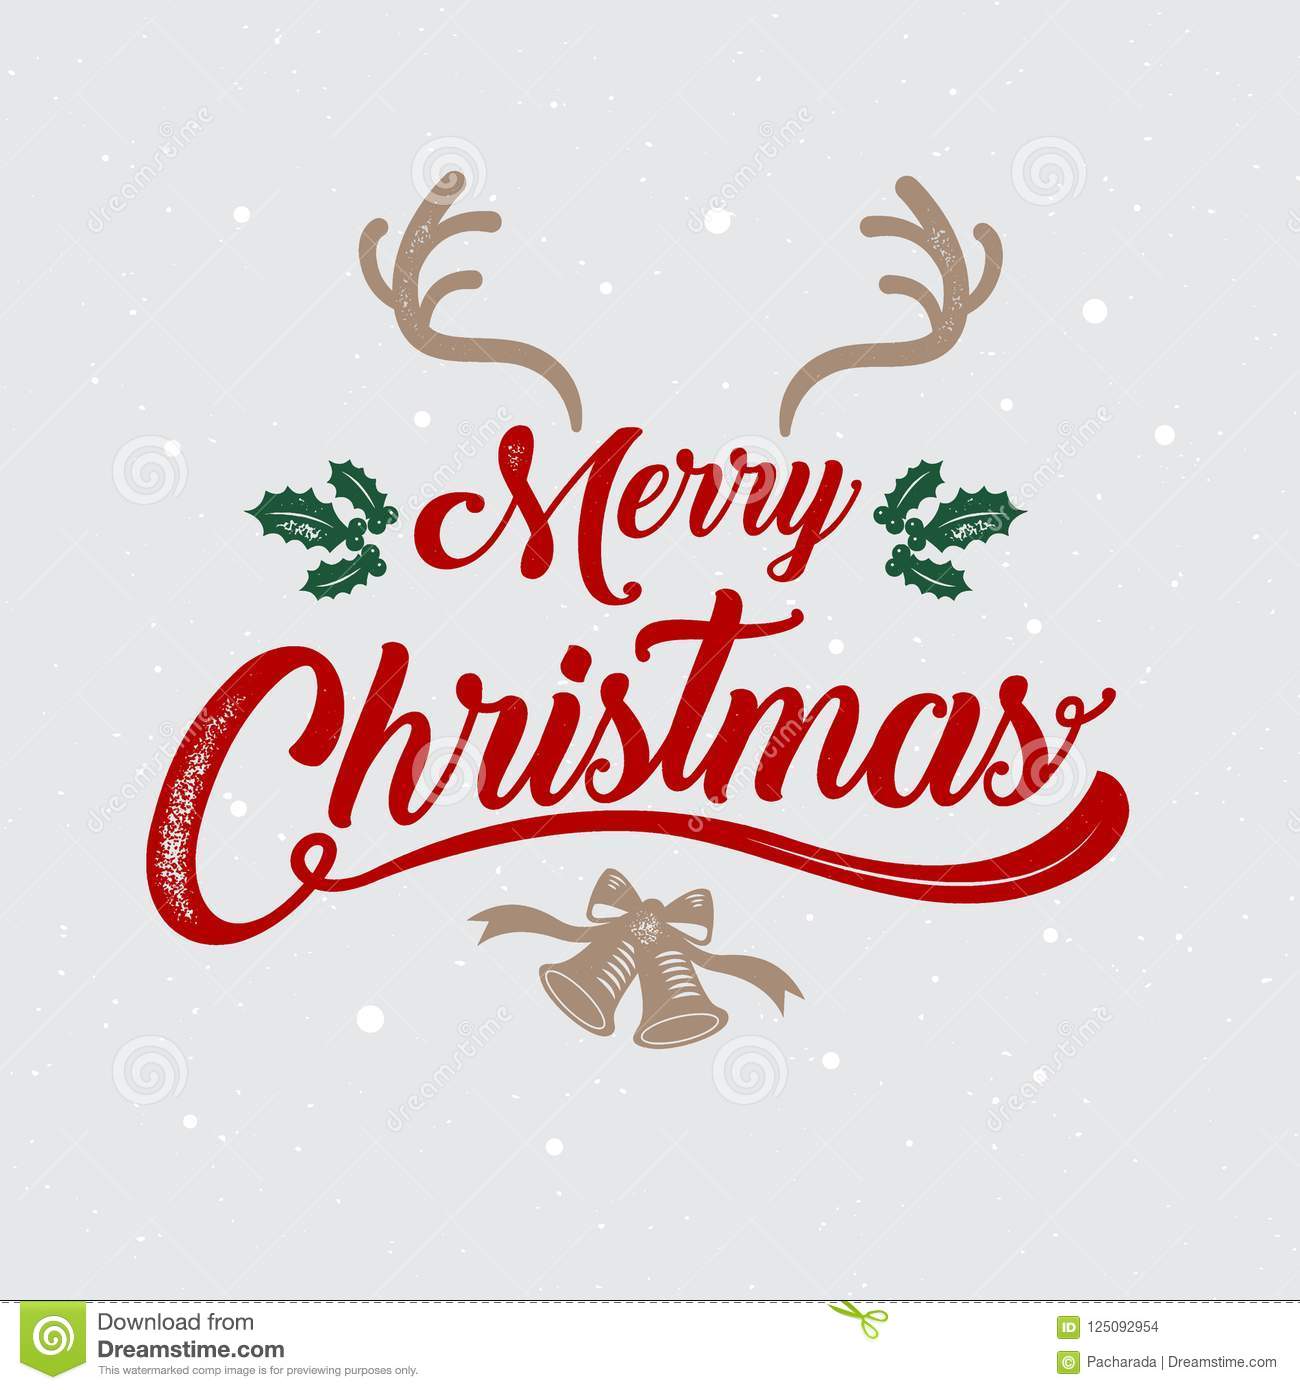 merry-christmas-happy-new-year-logo-symbol-design-vector-il-illustration-125092954.jpg